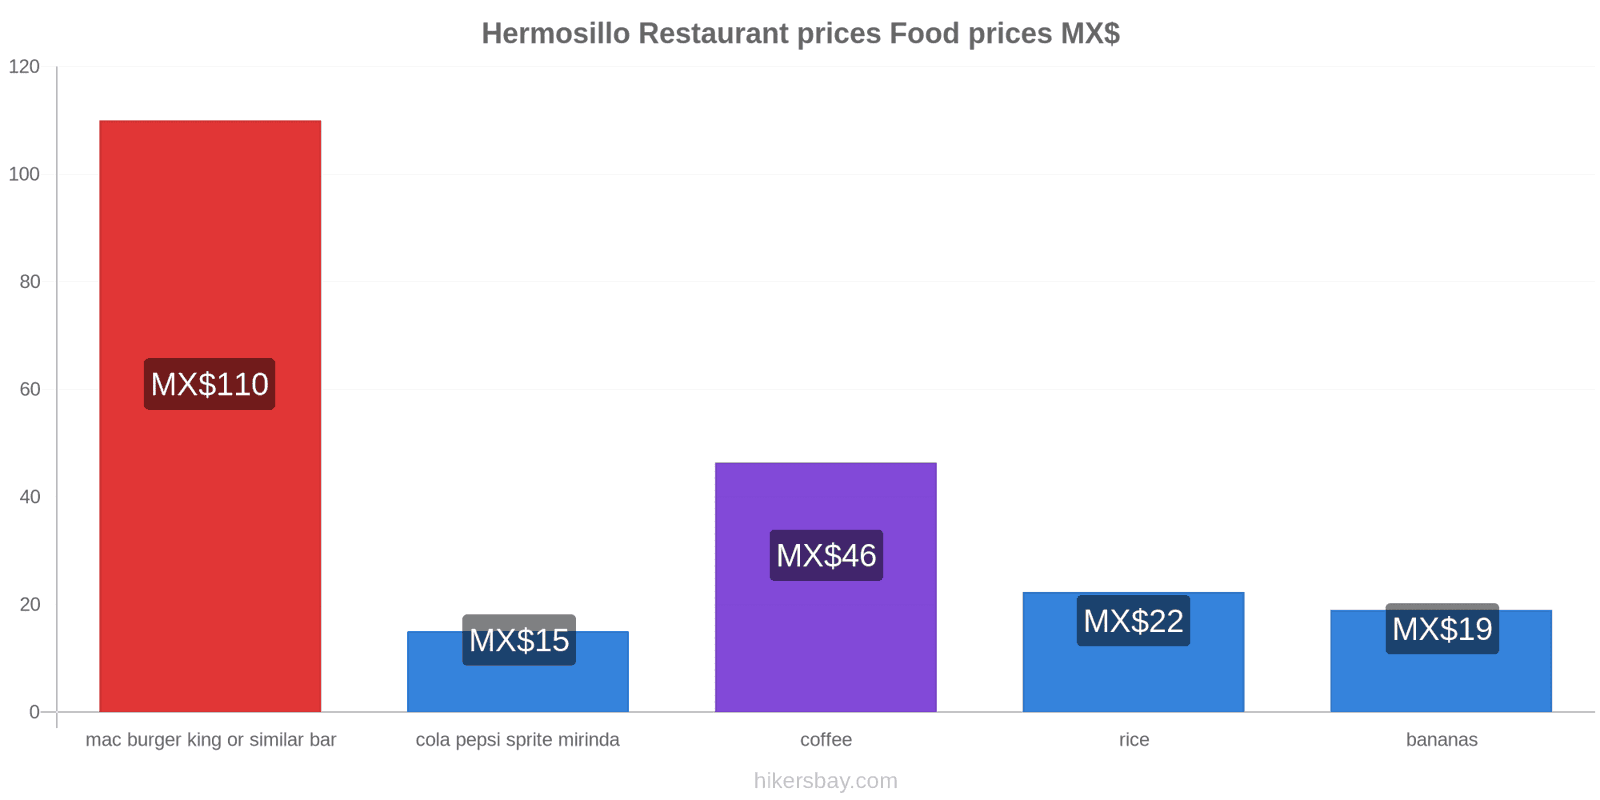 Hermosillo price changes hikersbay.com